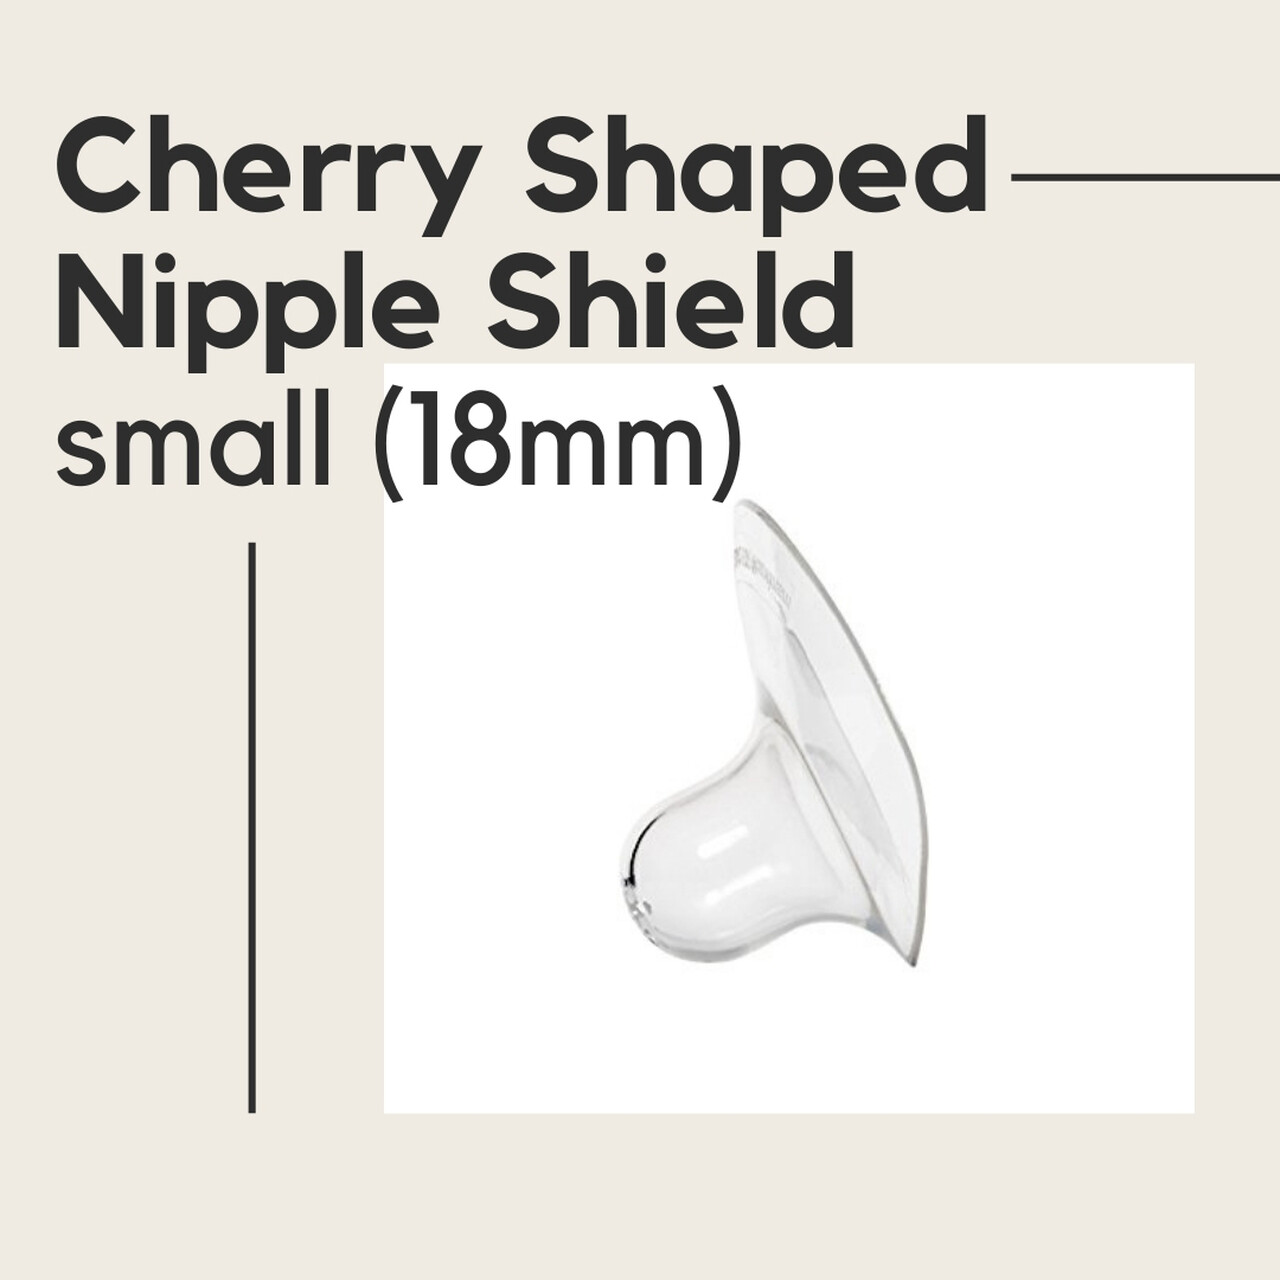 Cherry Shaped Nipple Shield (Small, 18mm)